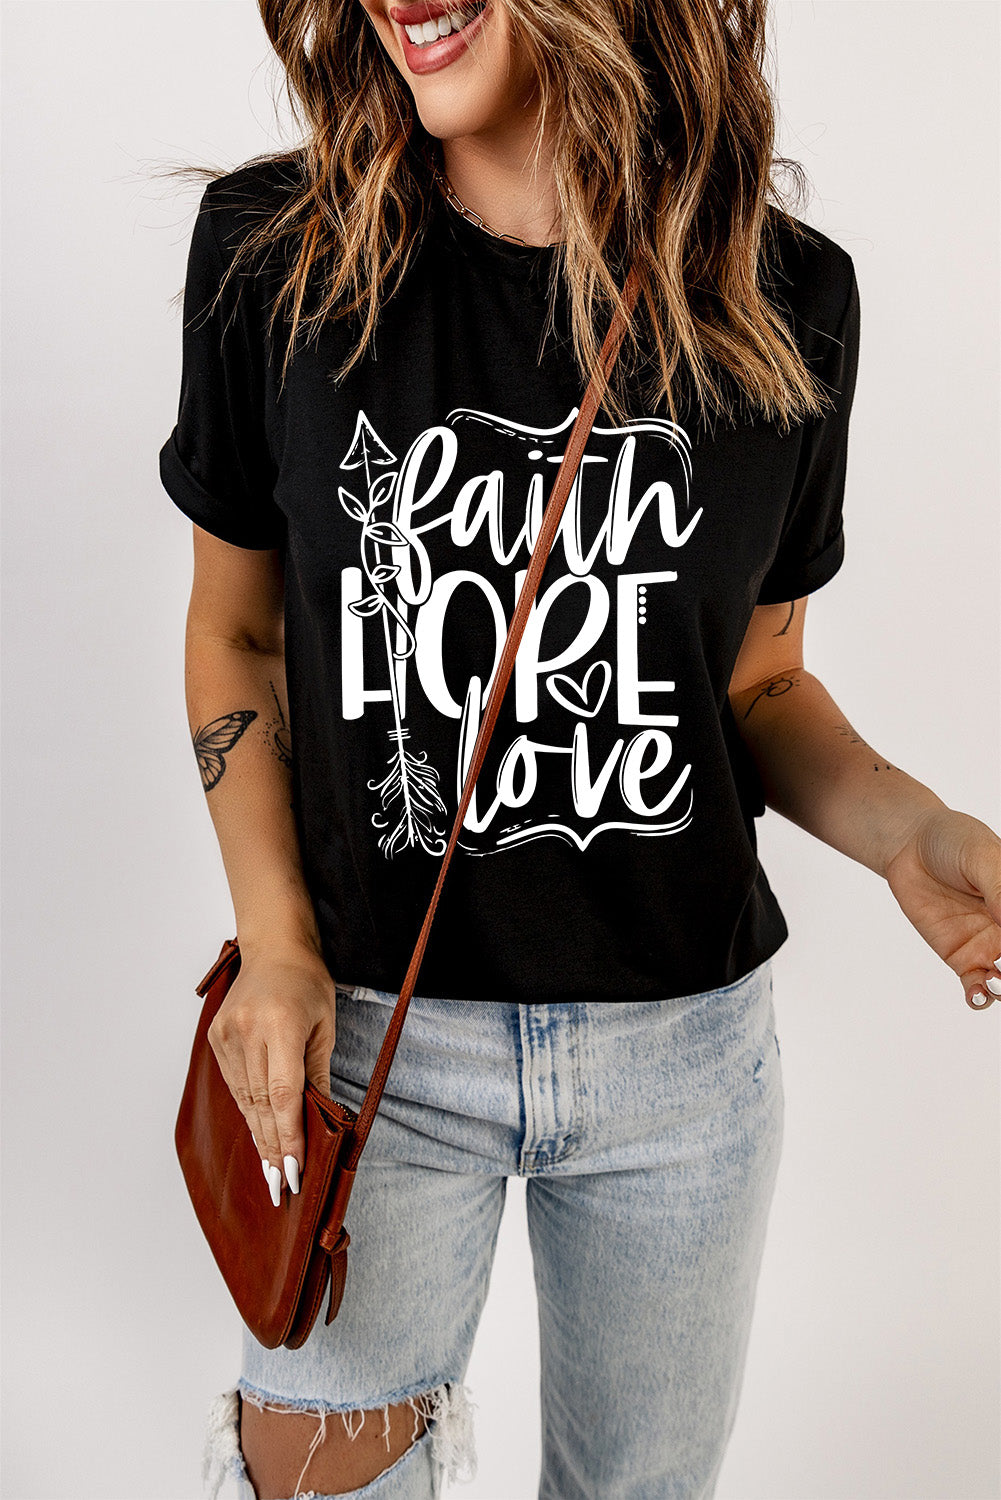 LADIES--FAITH HOPE LOVE Graphic Tee Shirt